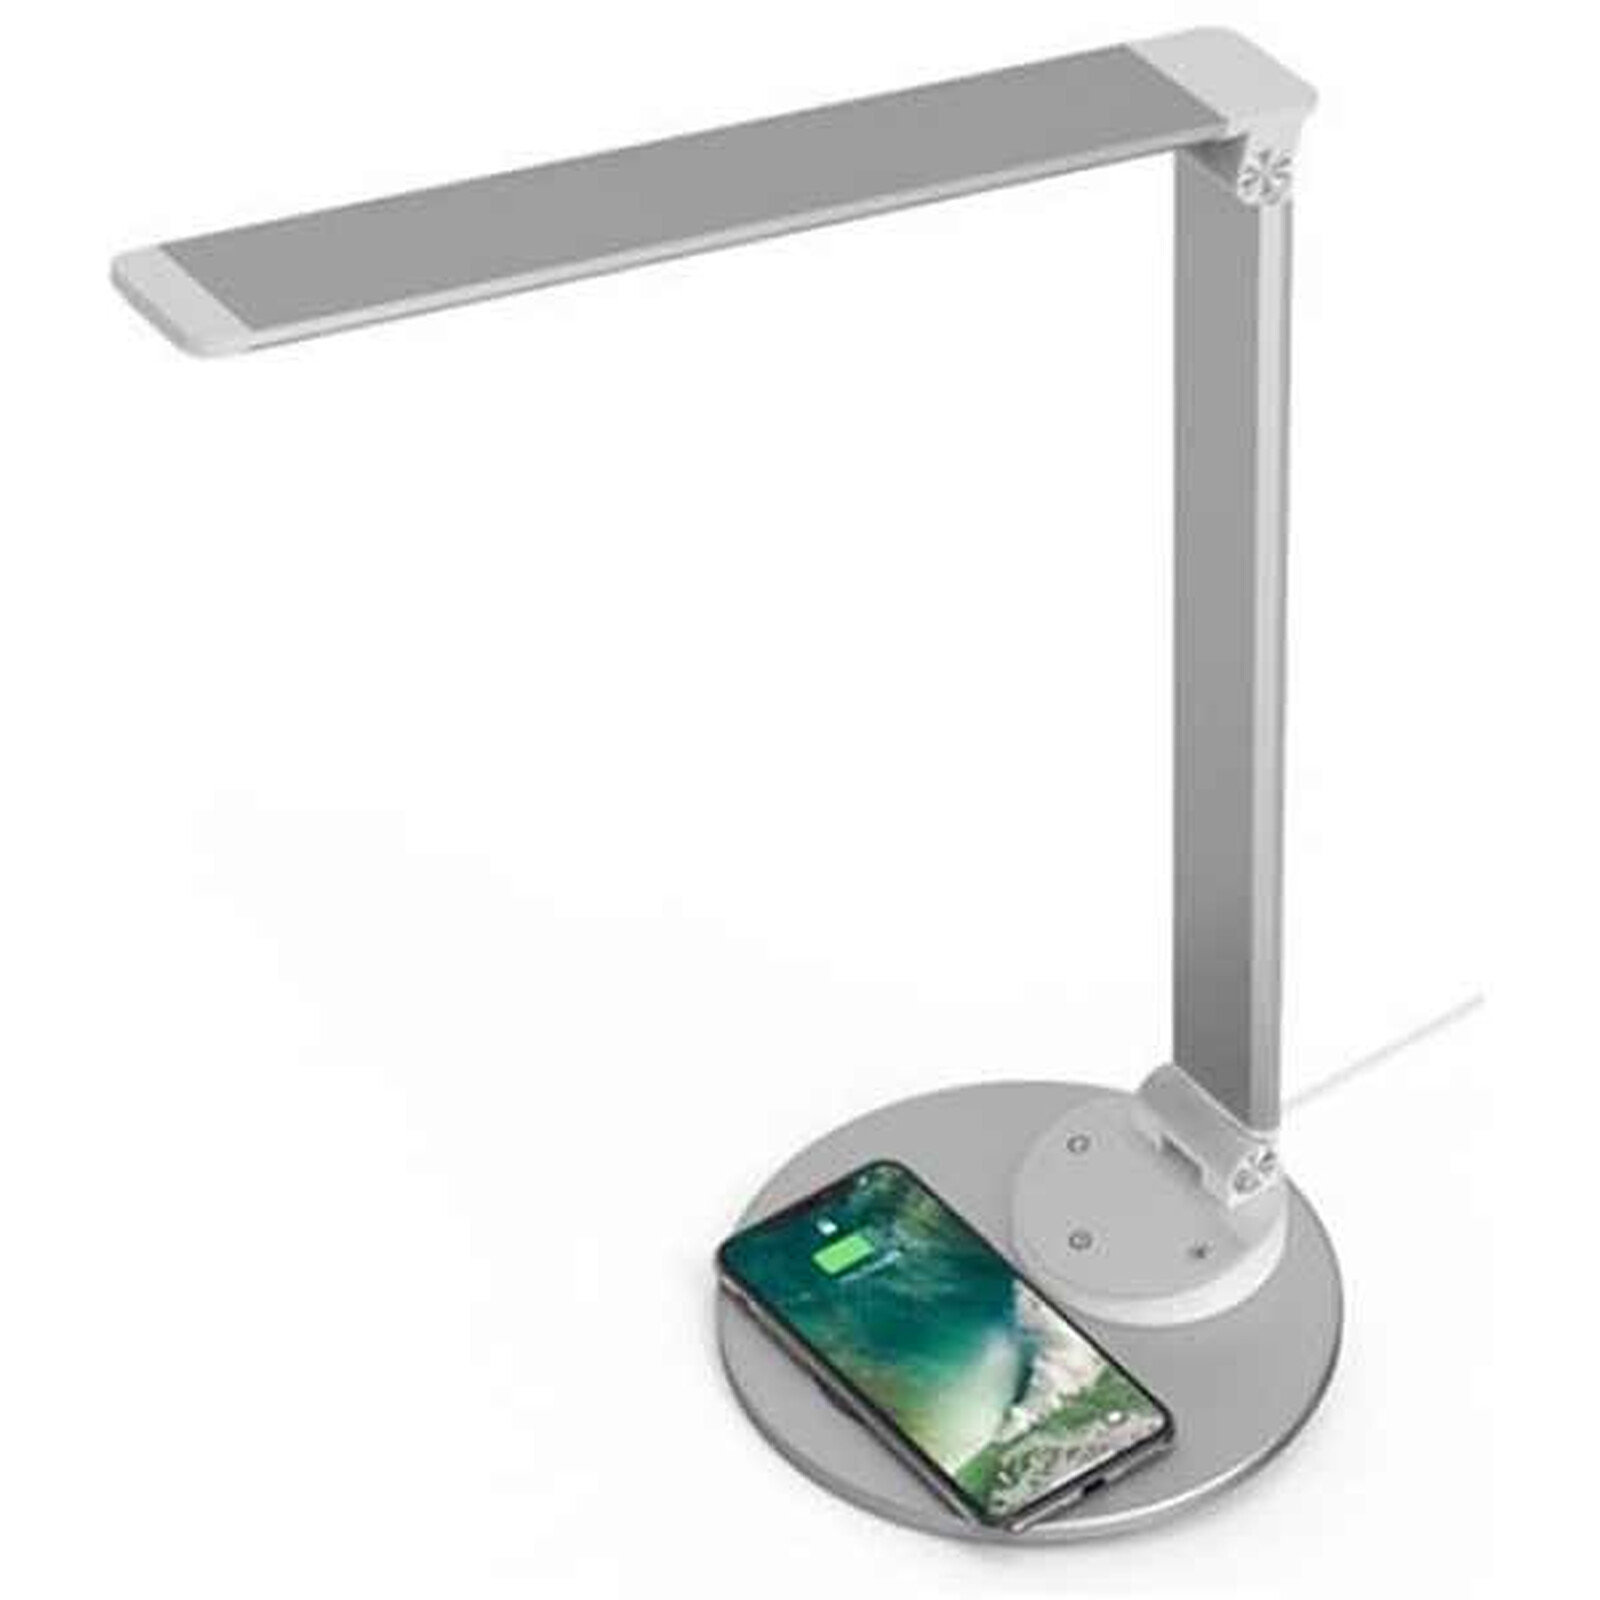 Taotronics Led Lamp Dl069 Silver, Taotronics Led Desk Lamp Usb Charging Touch Sensitive Dimmer